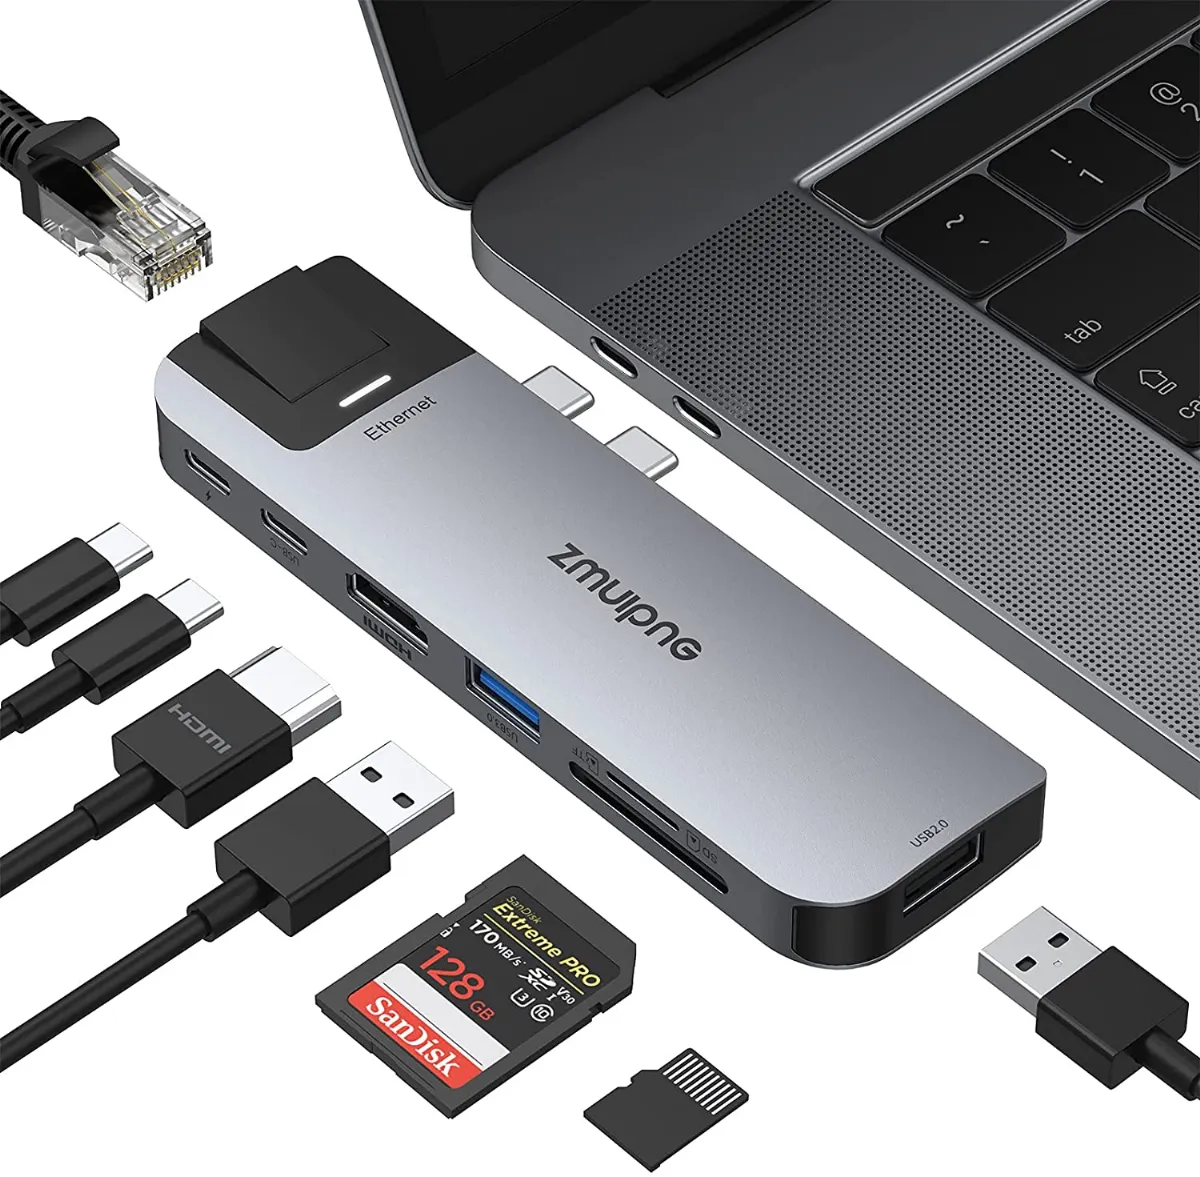 Had Hjælp Stillehavsøer ZMUIPNG USB C Adapter for MacBook Pro MacBook Air 13 15 16 inch  2020/2019/2018, USBC HDMI Dongle with 4K HDMI,1USB 3.0&1USB 2.0  Port,Gigabit Ethernet,SD/TF Reader,Thunderbolt 3 and USB C Port 8 IN